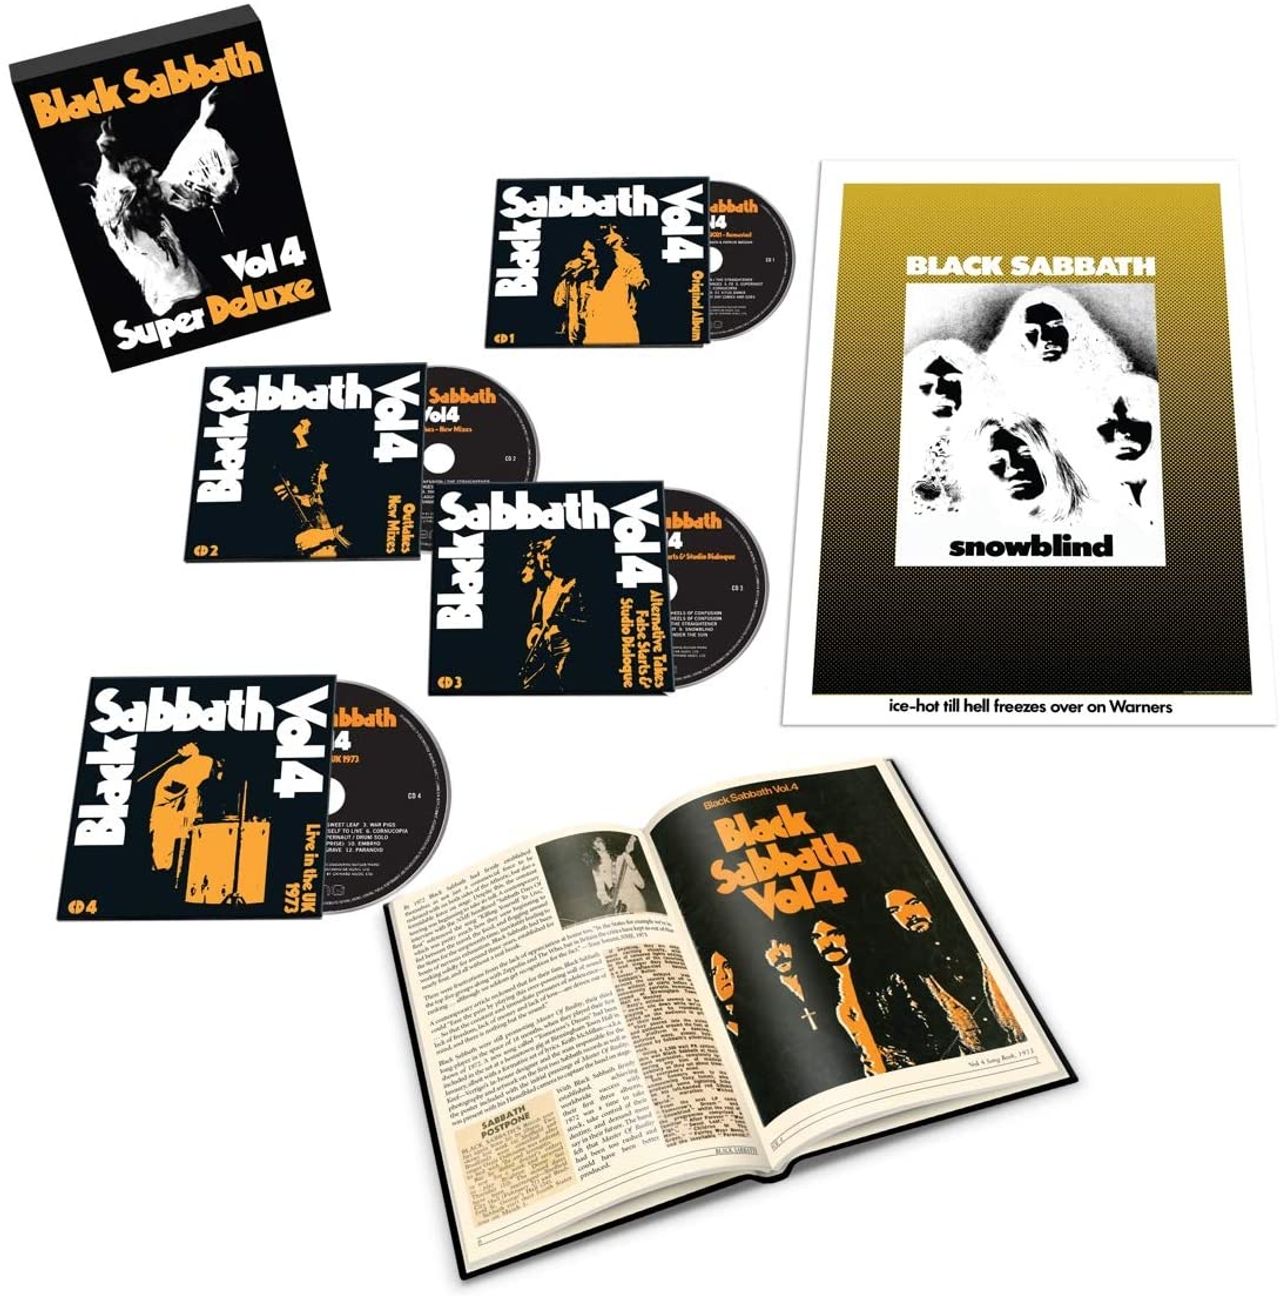 Black Sabbath Vol. 4 - Super Deluxe Edition (4CD) - Sealed UK Cd